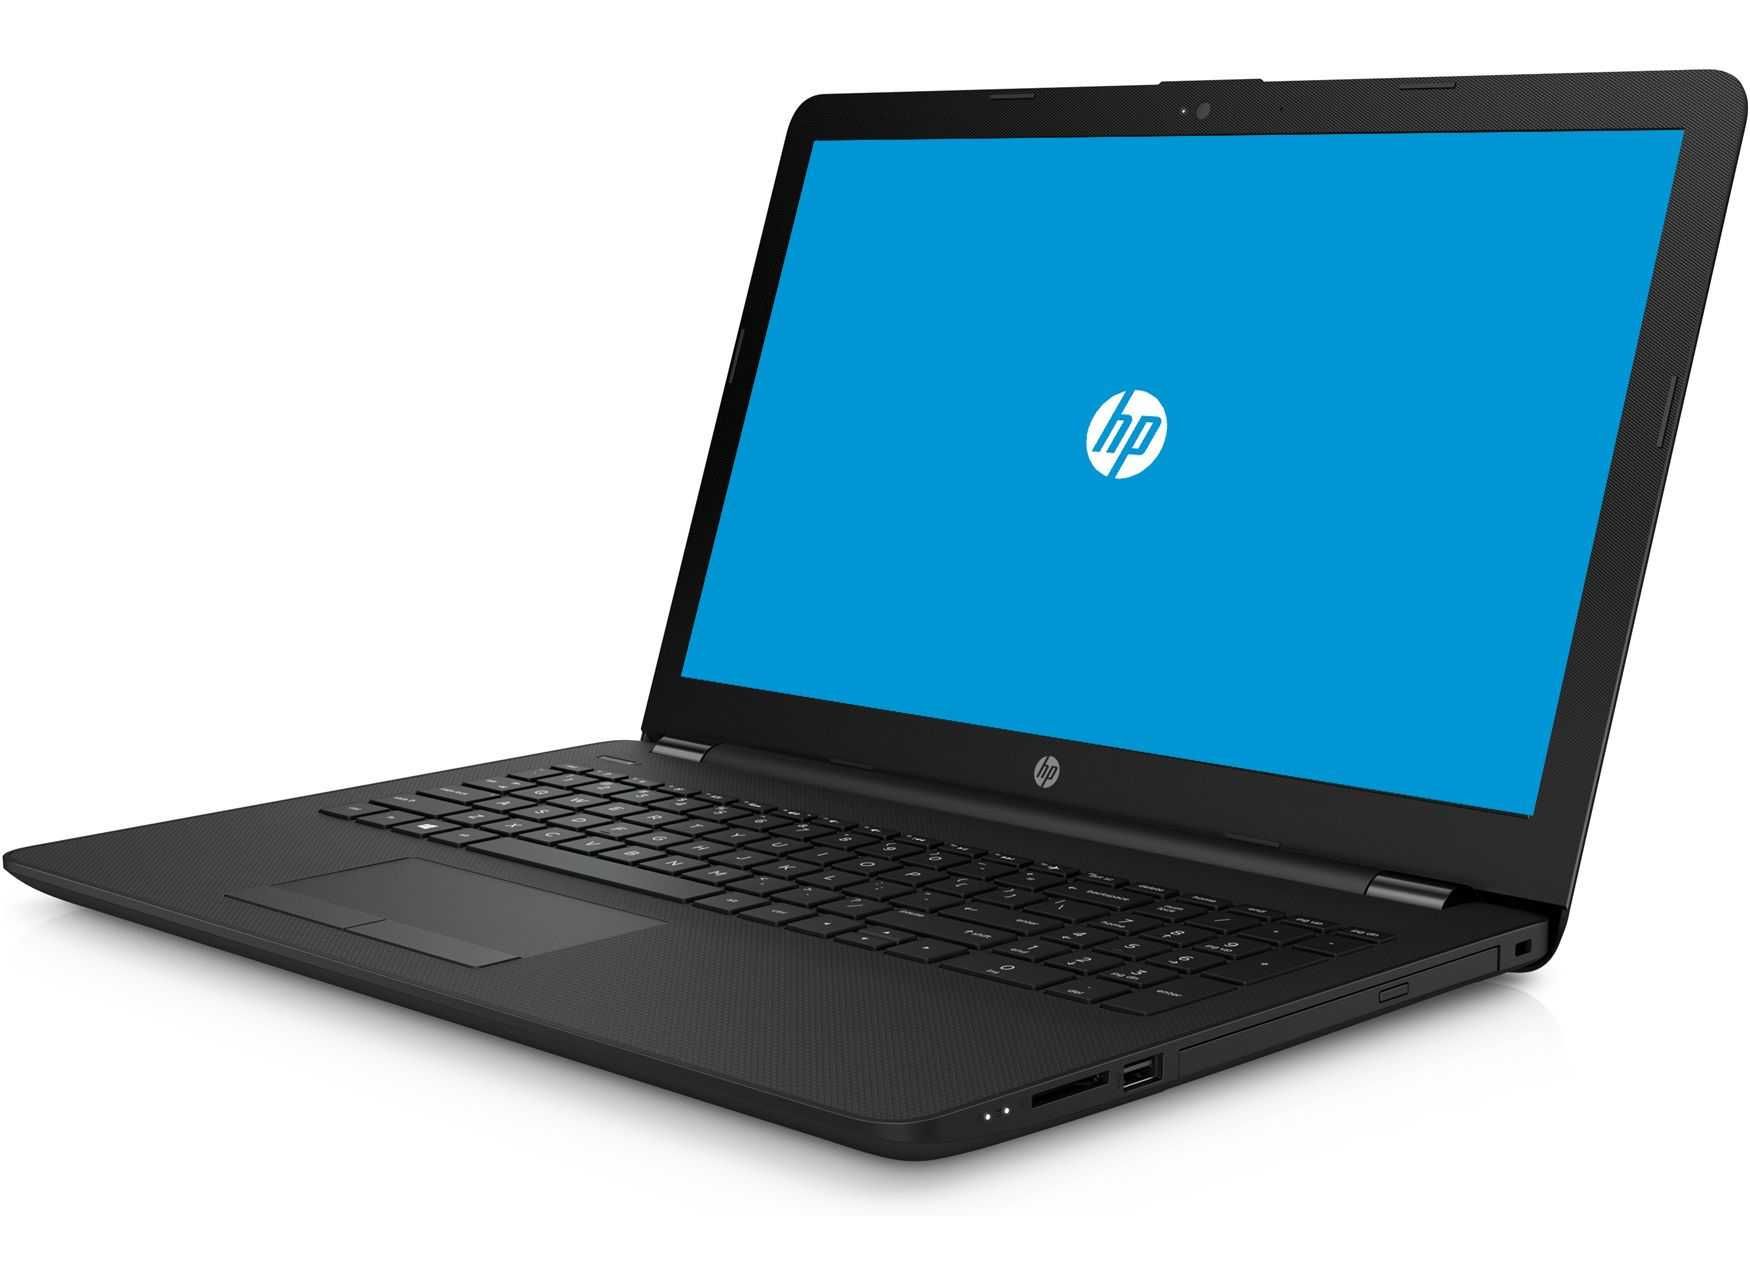 Новый ноутбук HP Core i3+8GbDDR4+1000Gb+15.6"+Win10+программы+доставка